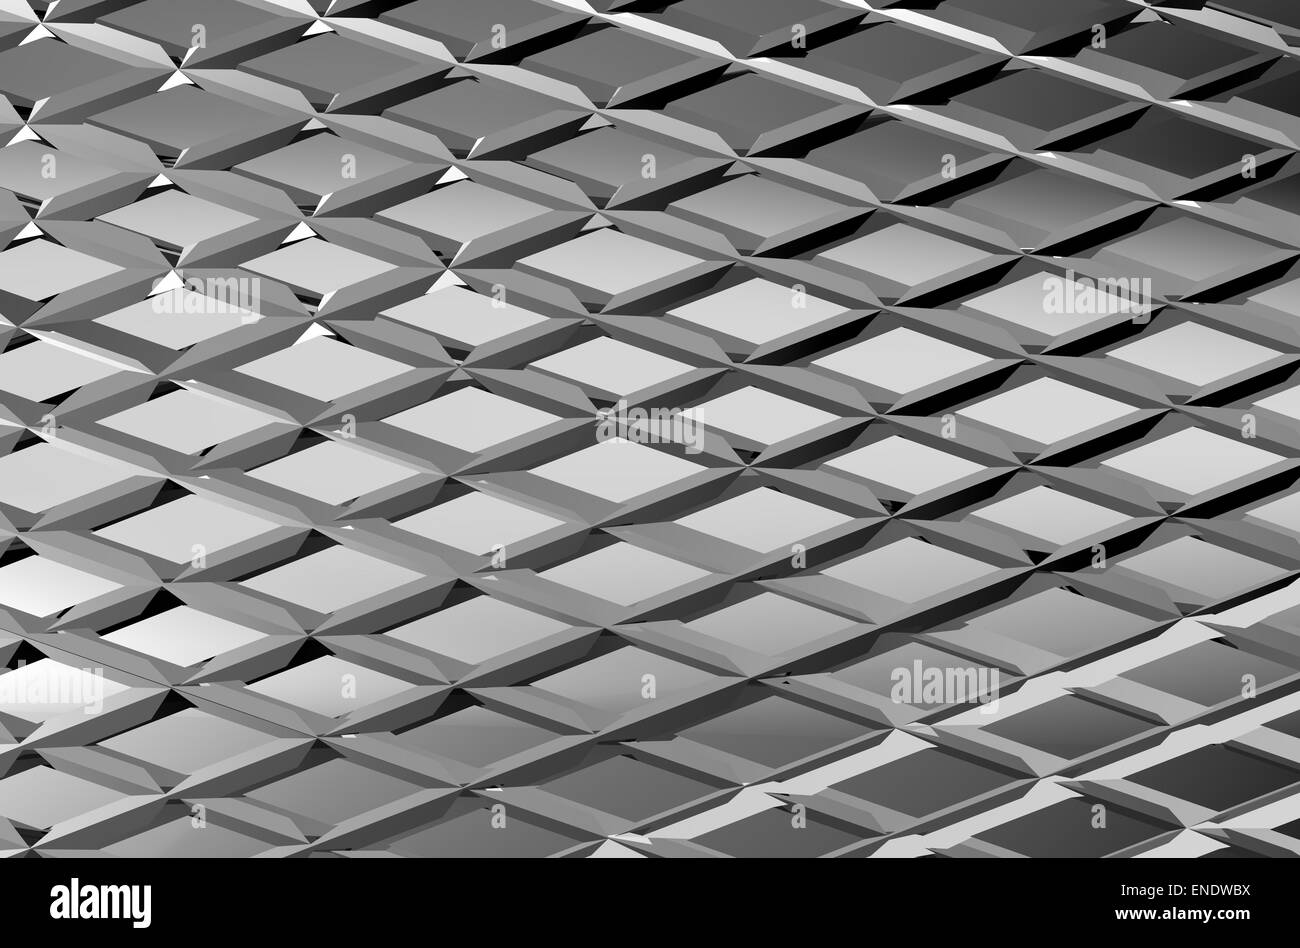 Diamond metal sheet background Stock Photo - Alamy